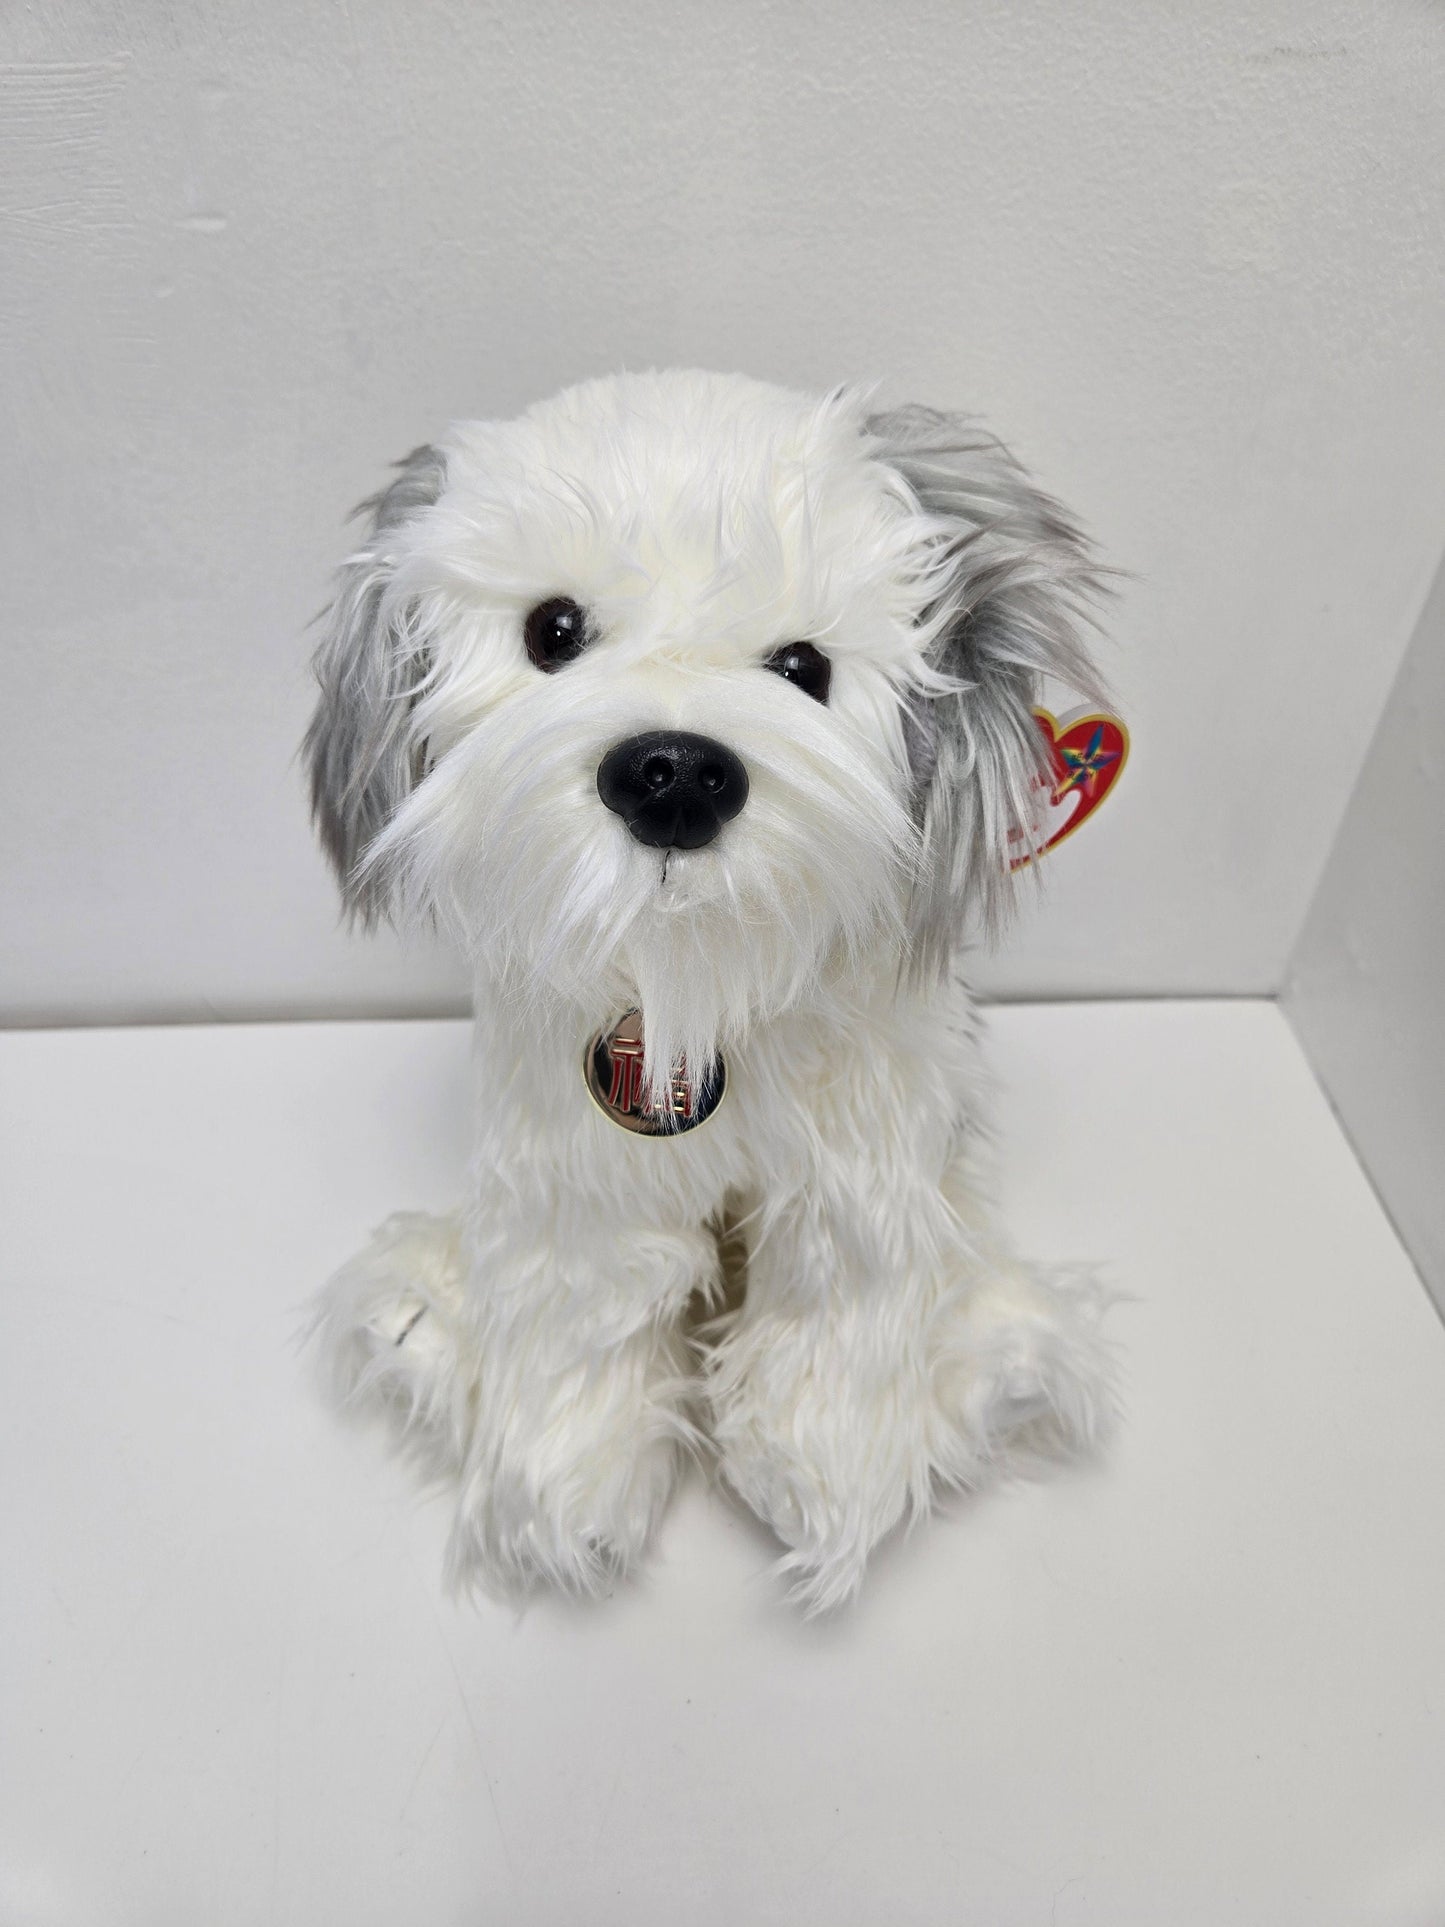 Ty Beanie Buddy “Year of the Dog” the Zodiac Dog Rare! (12 inch)